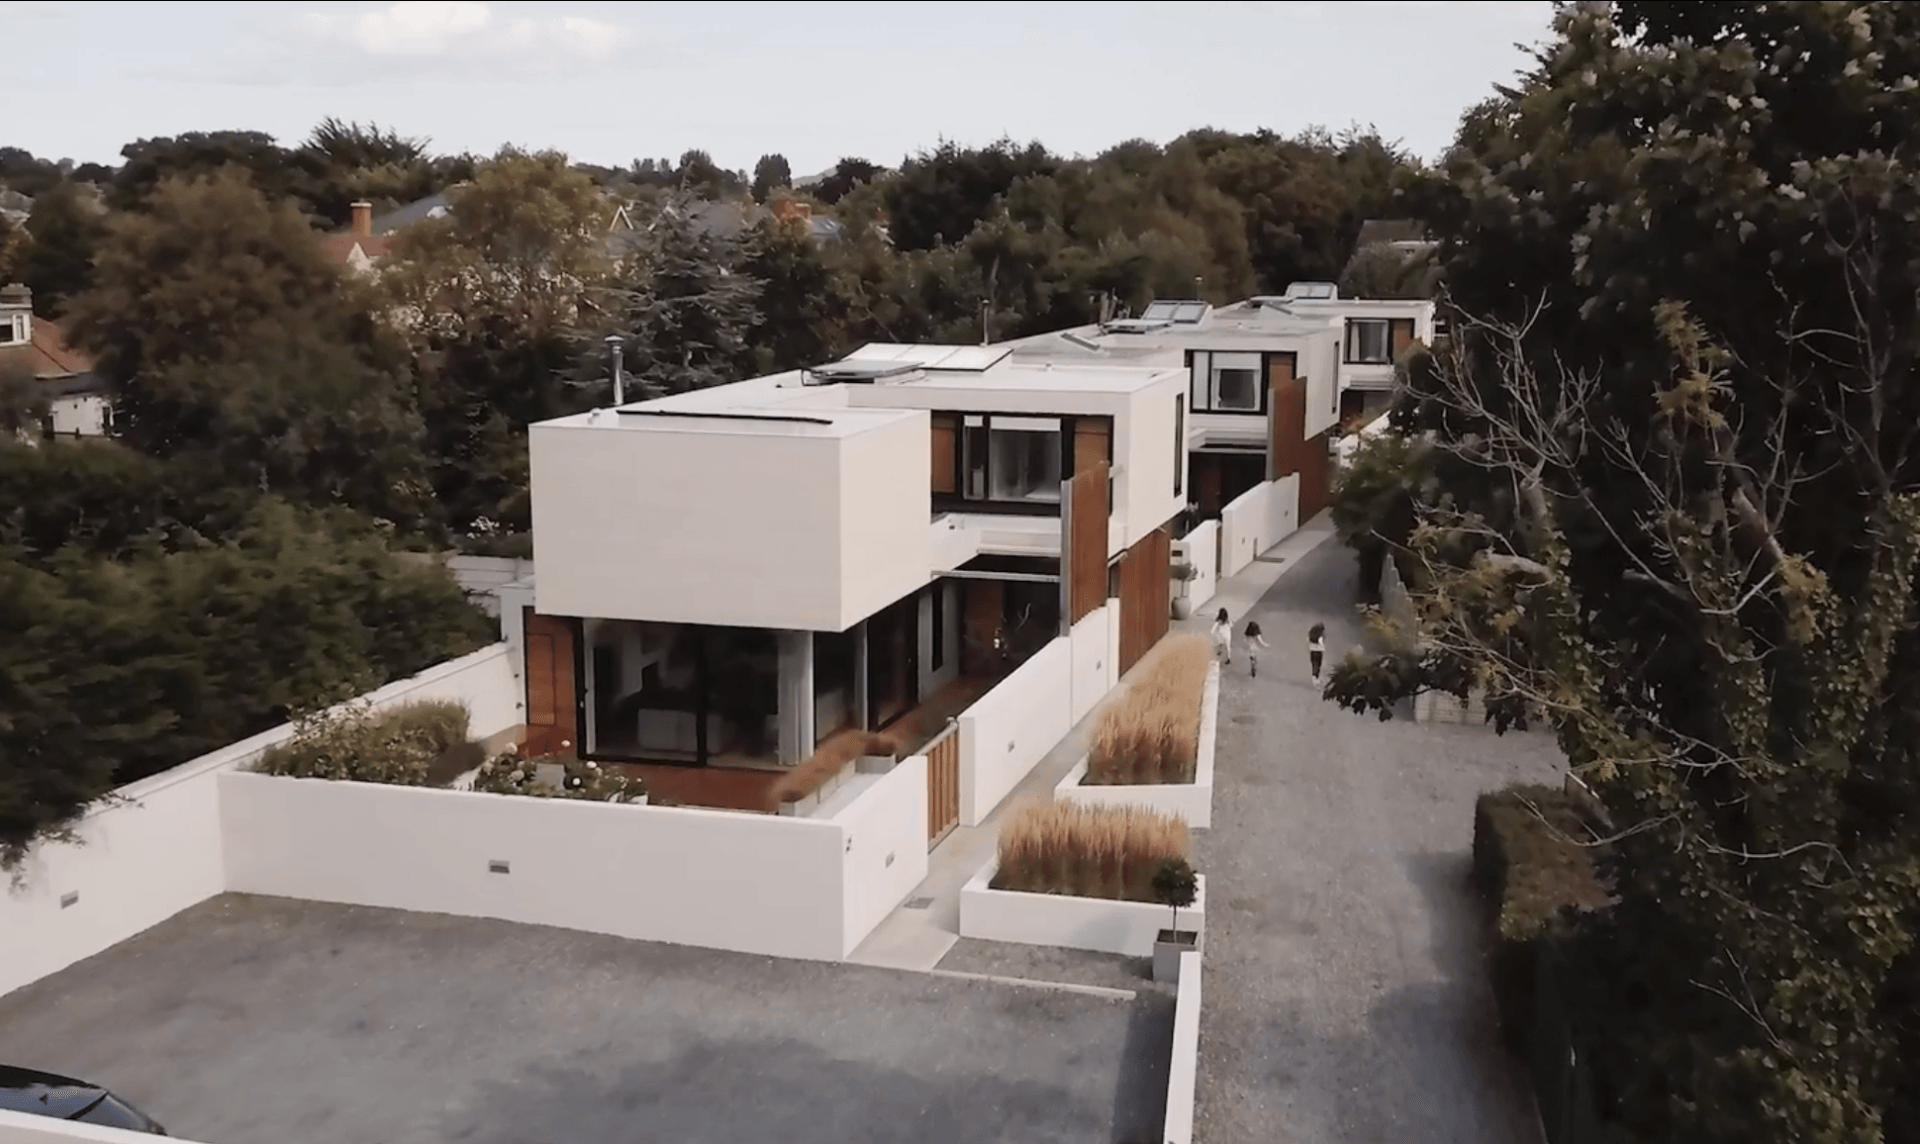 Architectural building designed by 'Dublin Design Studio' an aerial shoot of Avivaa Hazel house.